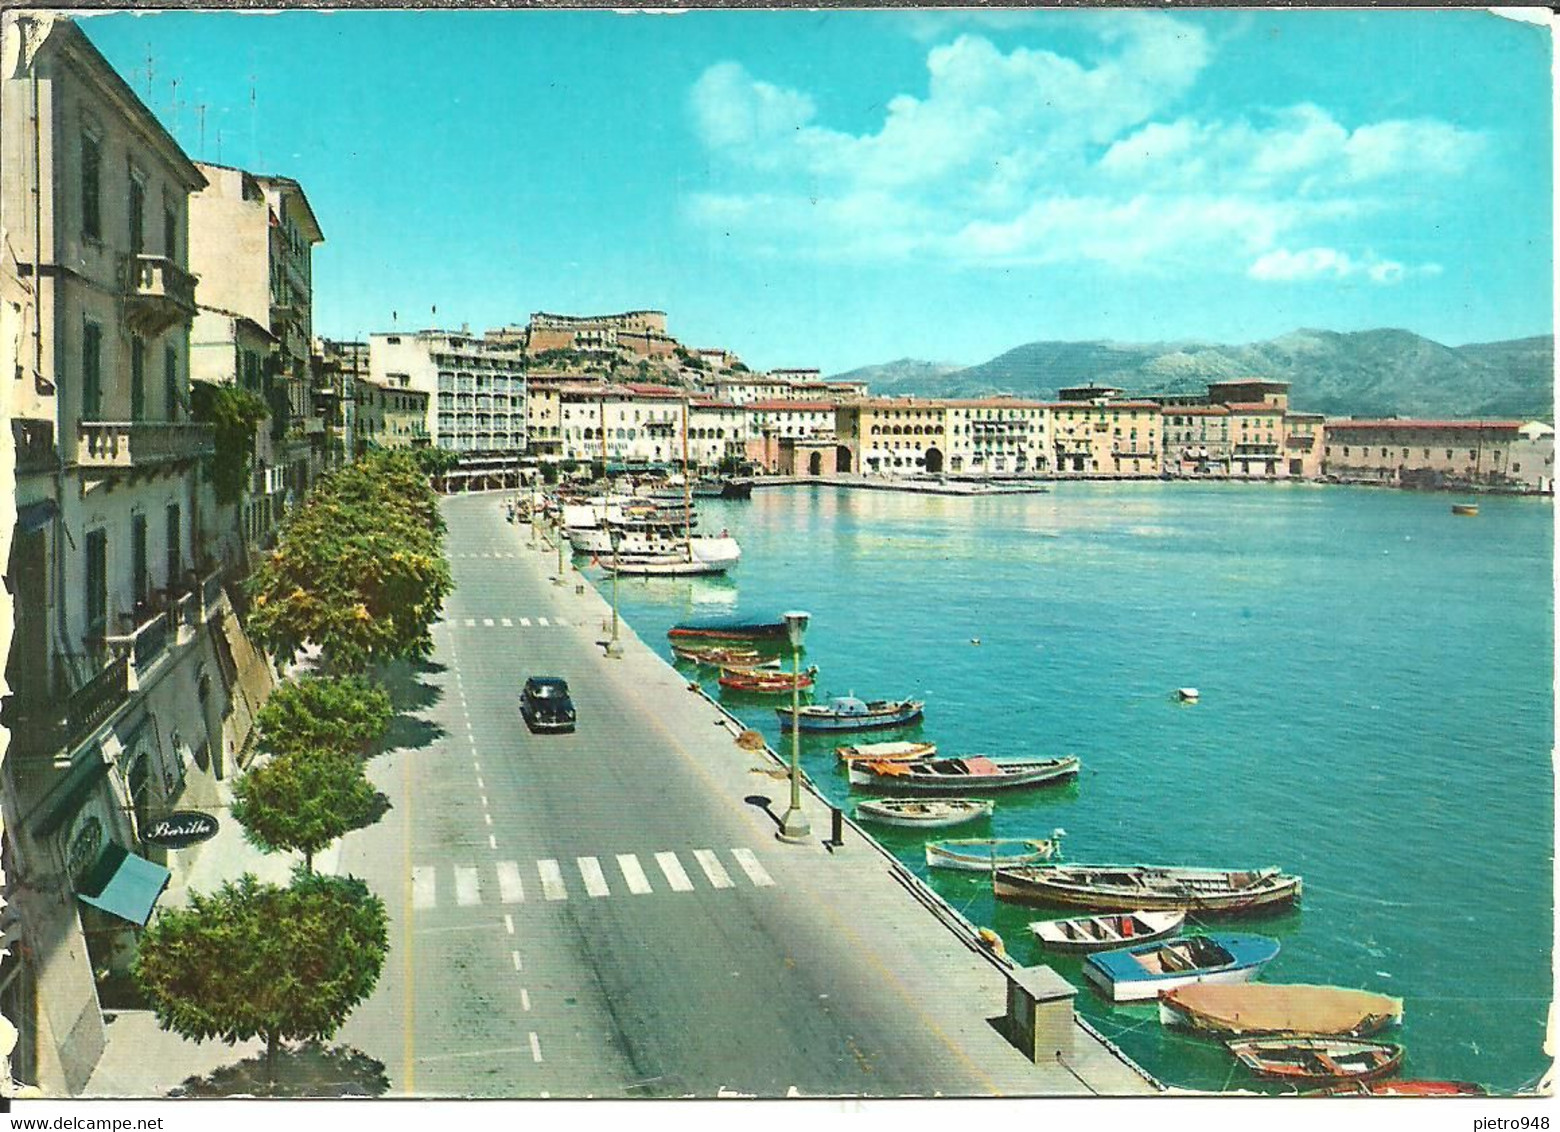 Isola D'Elba, Portoferraio (Livorno) Darsena, The Harbour, Le Port, Der Hafen - Livorno